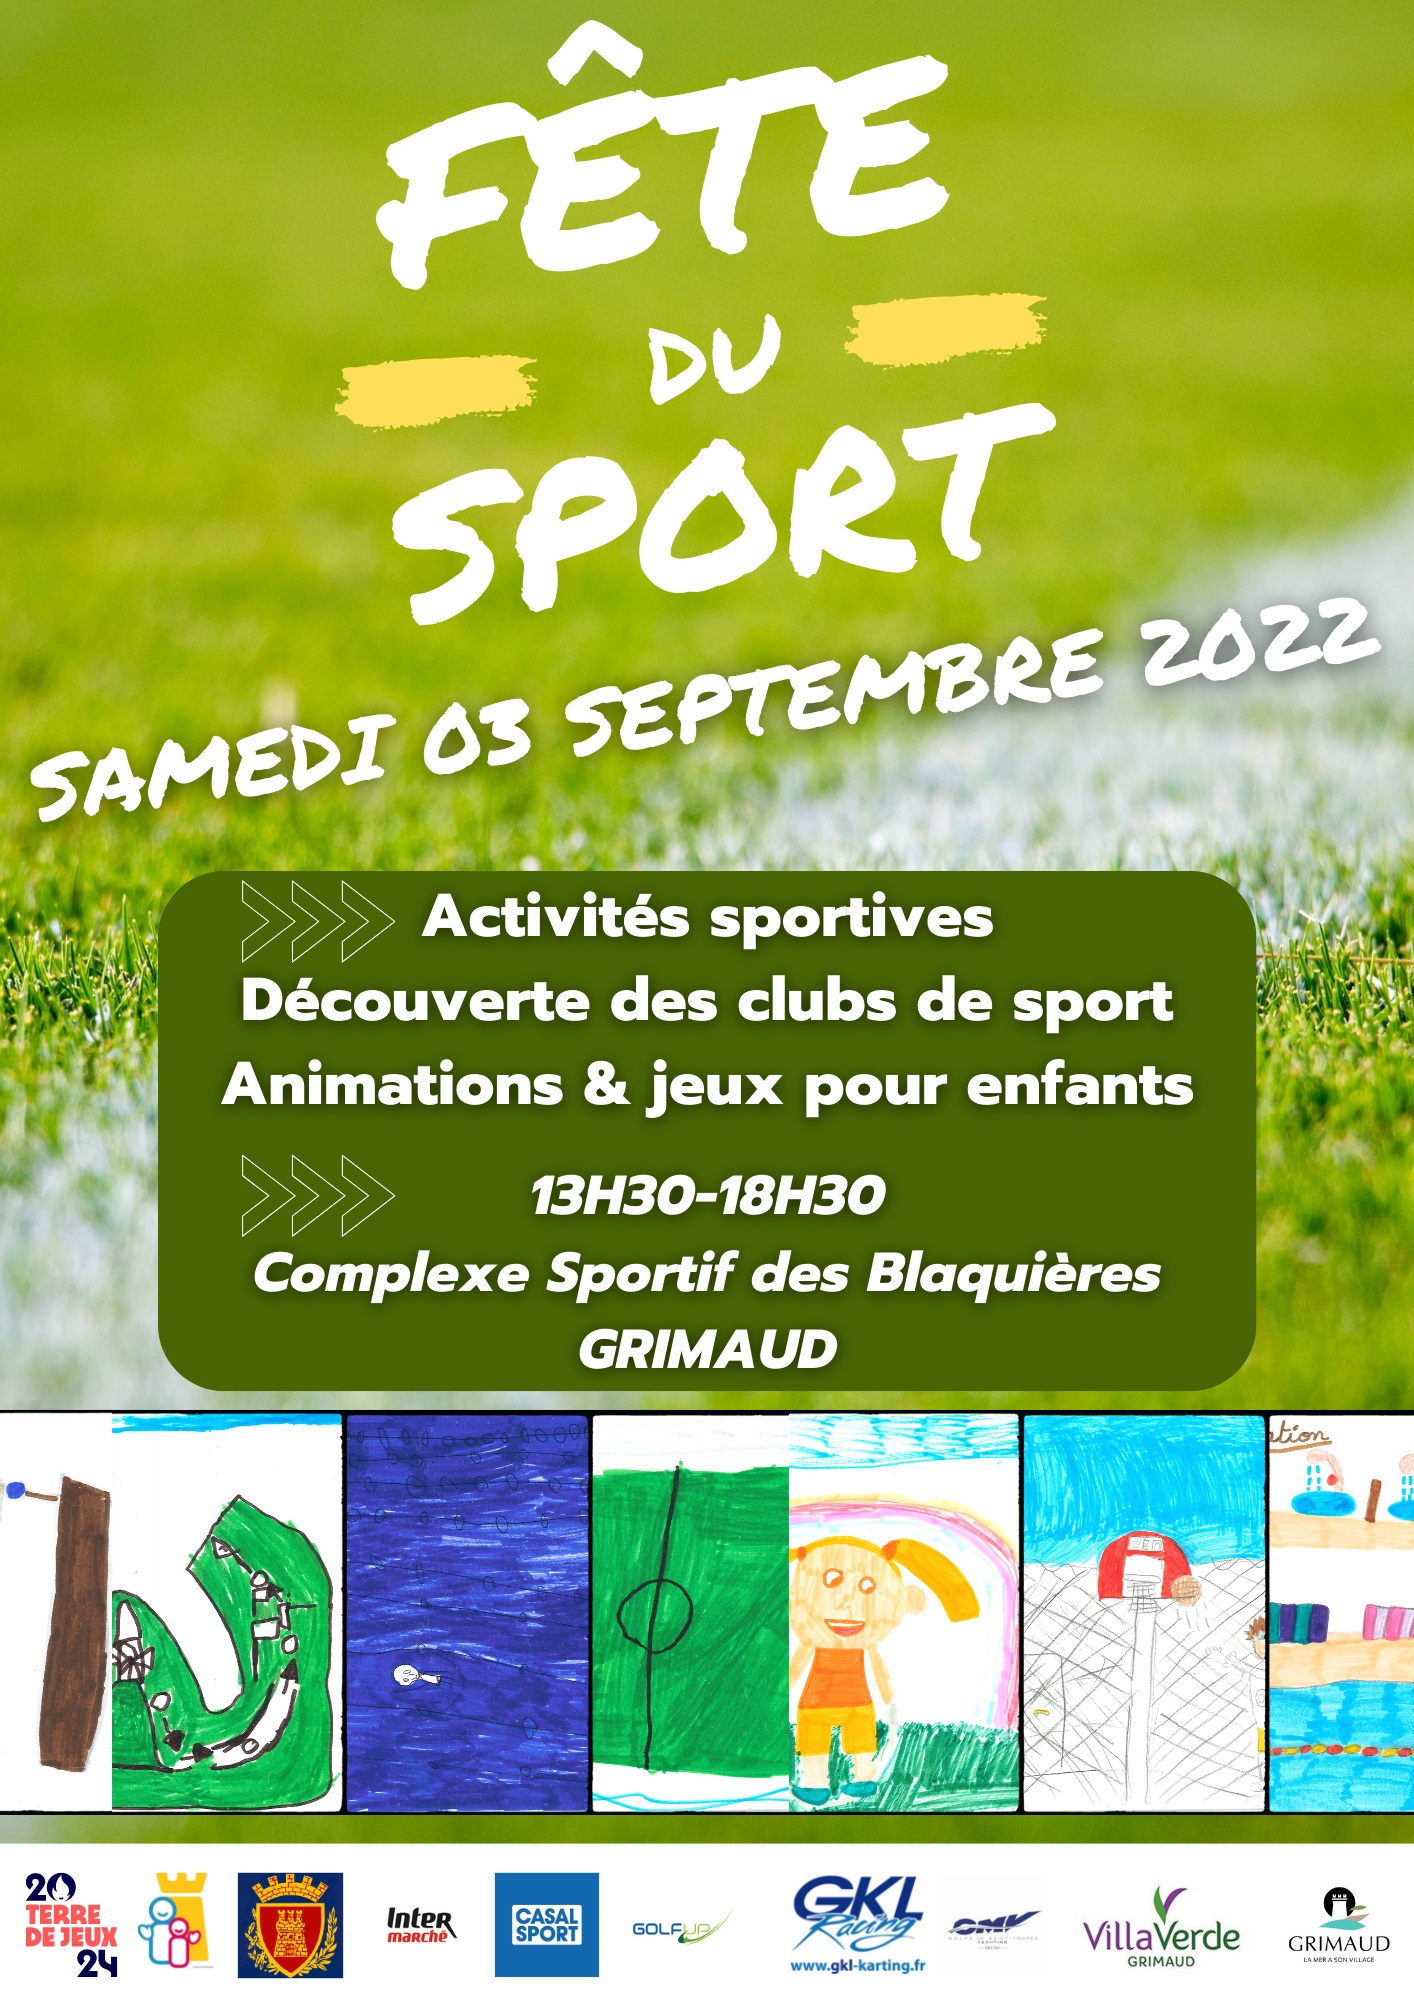 Samedi 03 septembre 2022 : fête du sport 2022